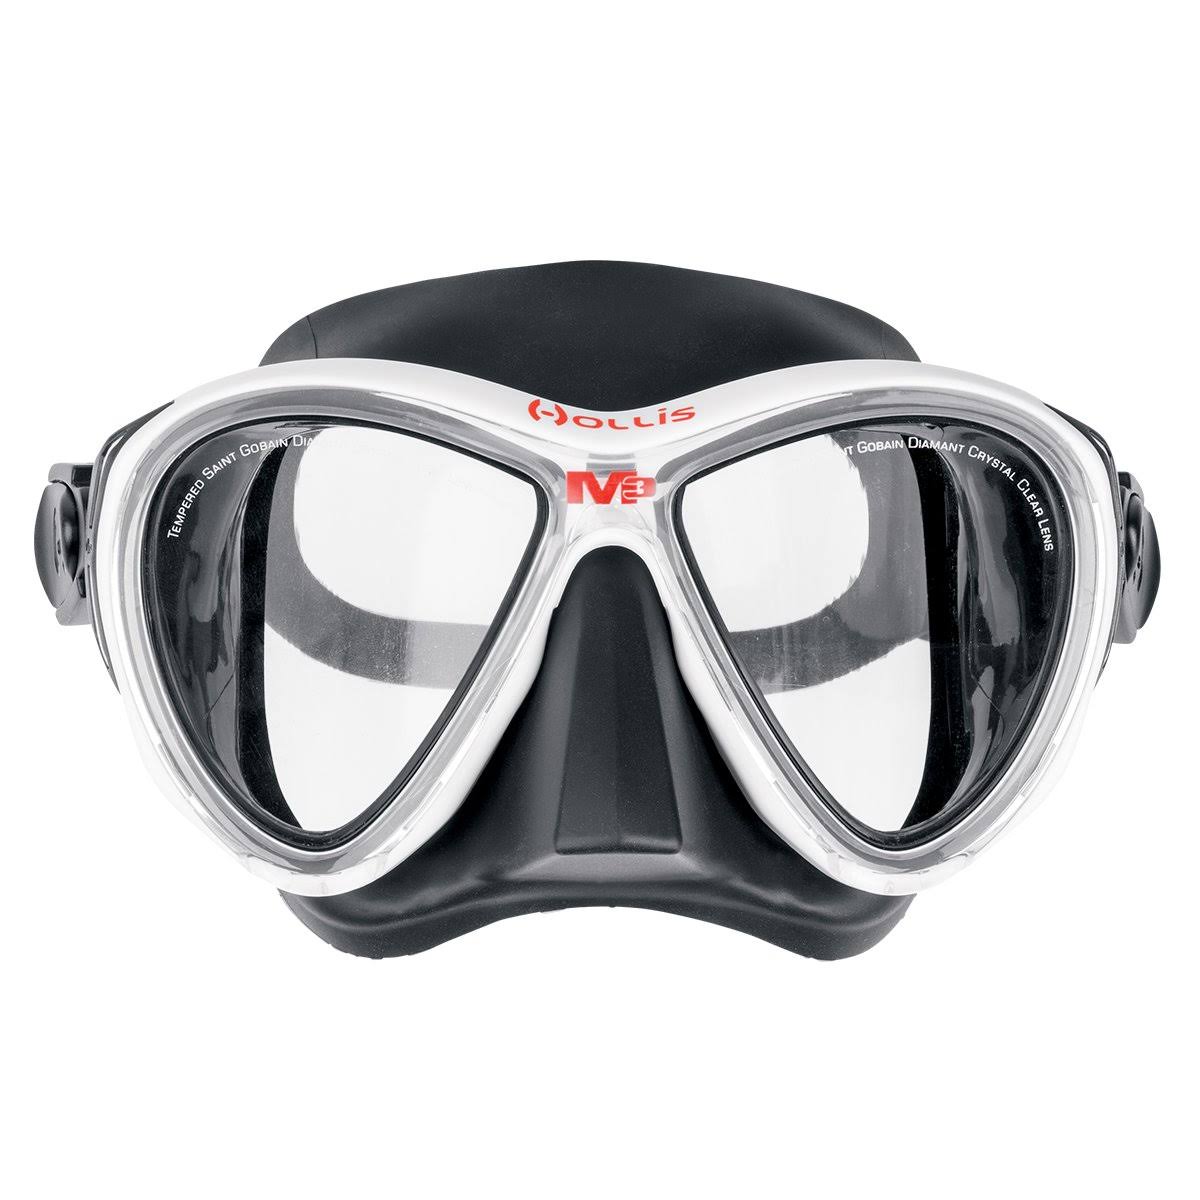 Hollis M3 Scuba Diving and Snorkeling Mask - White/Black